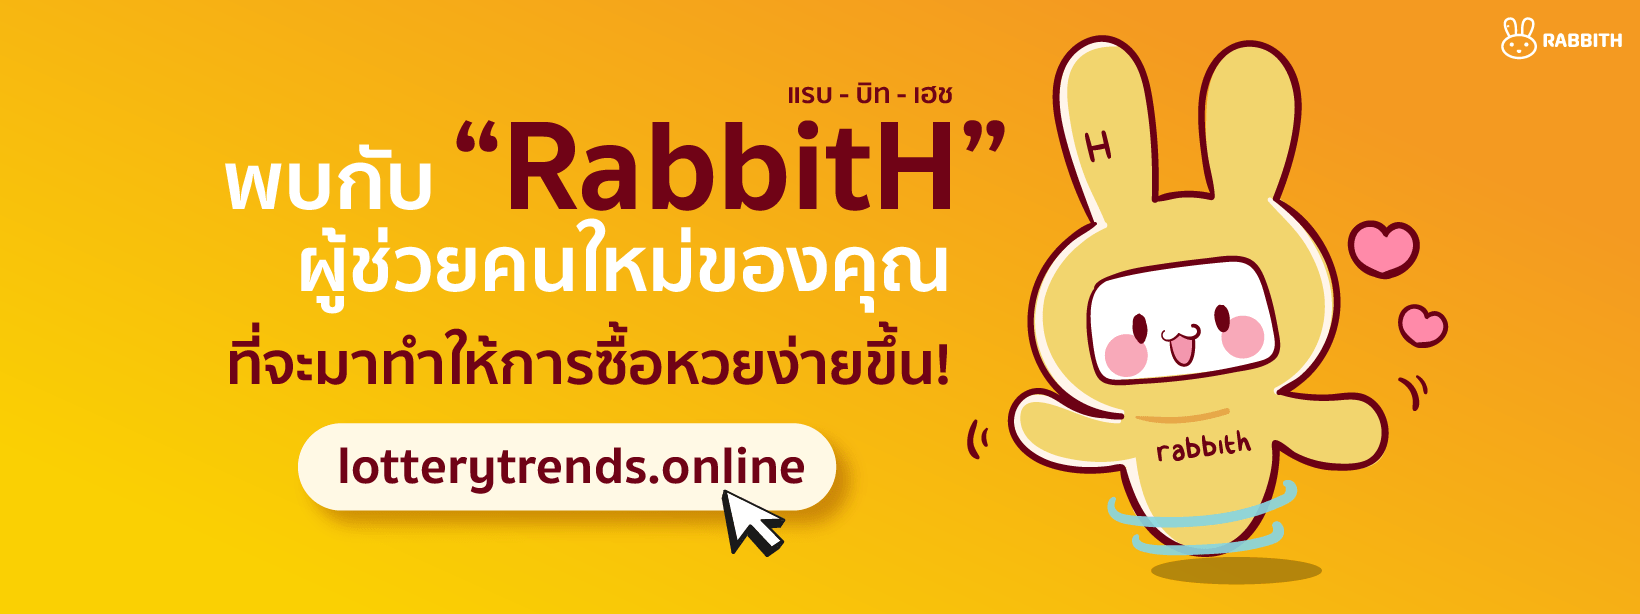 rabbith FB cover